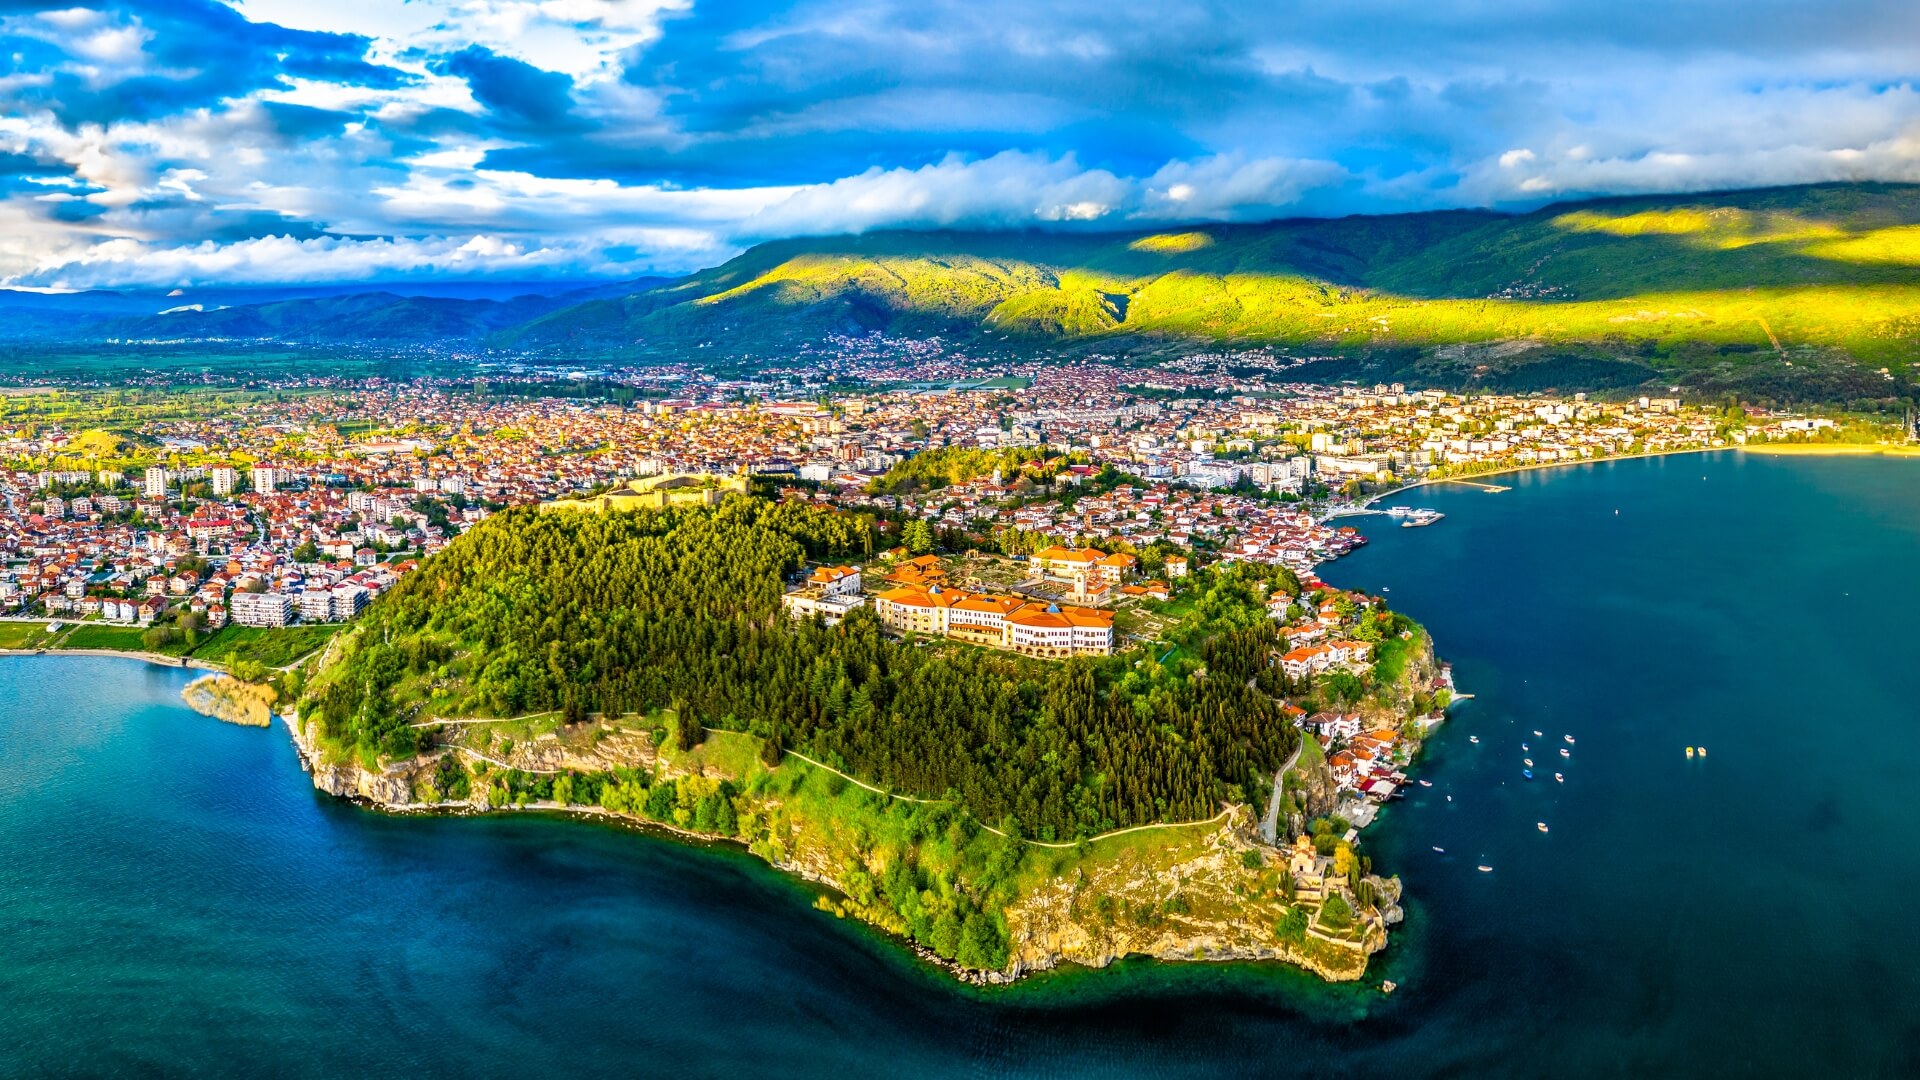 Destination: Ohrid, North Macedonia